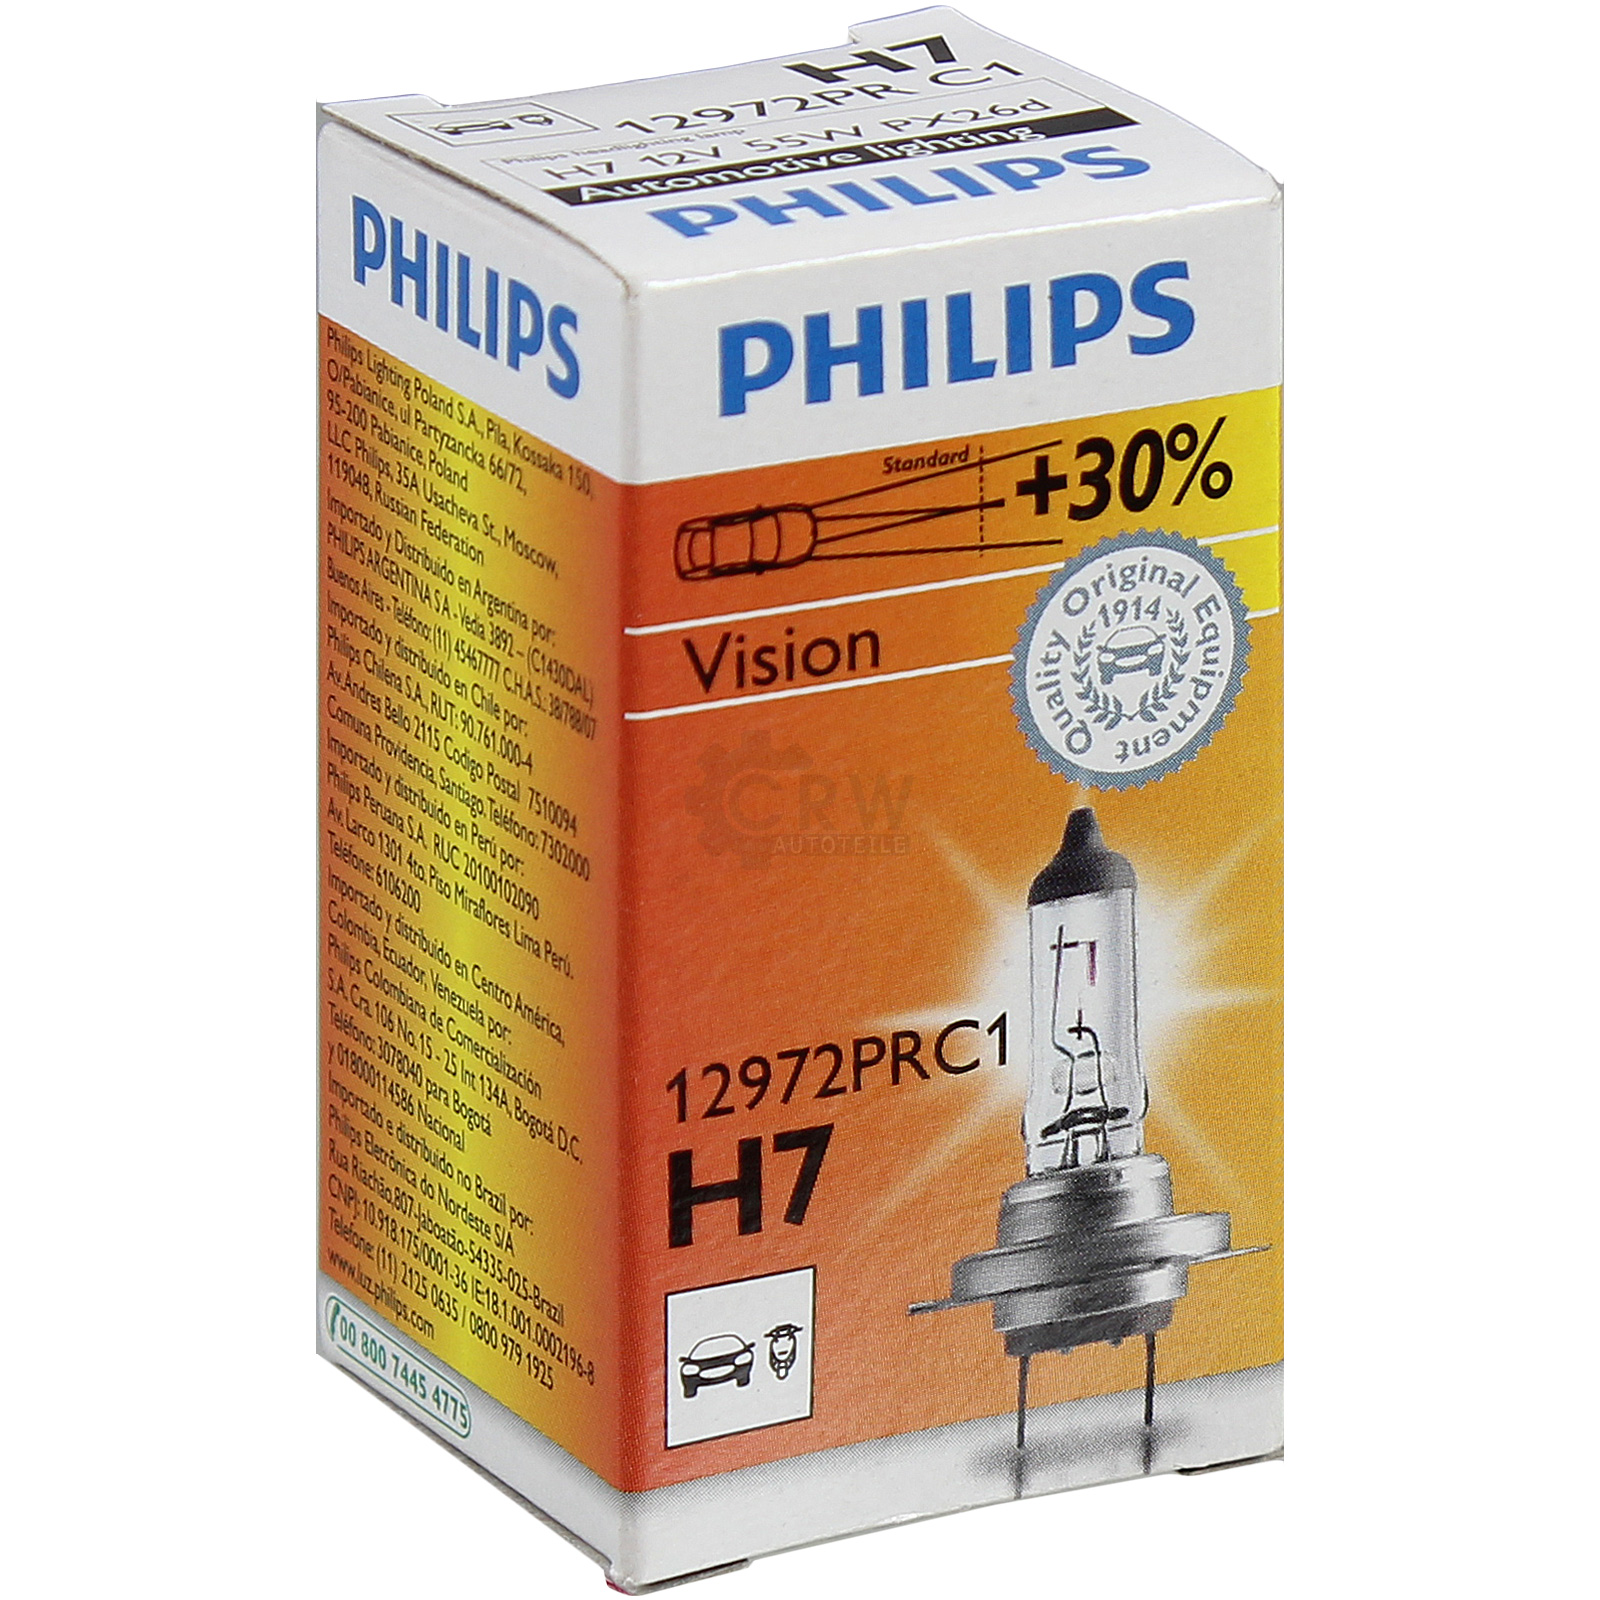 Philips h7 купить. Лампы Philips h7 12972prc1. Лампа галоген. H7 12v 55w Philips Premium +30% 12972prc1 картон. Philips h7-12-55 +30% Vision 12972prc1 от. Лампа h-7 12v 55w Philips (12972pr) Premium +30% 1 шт.